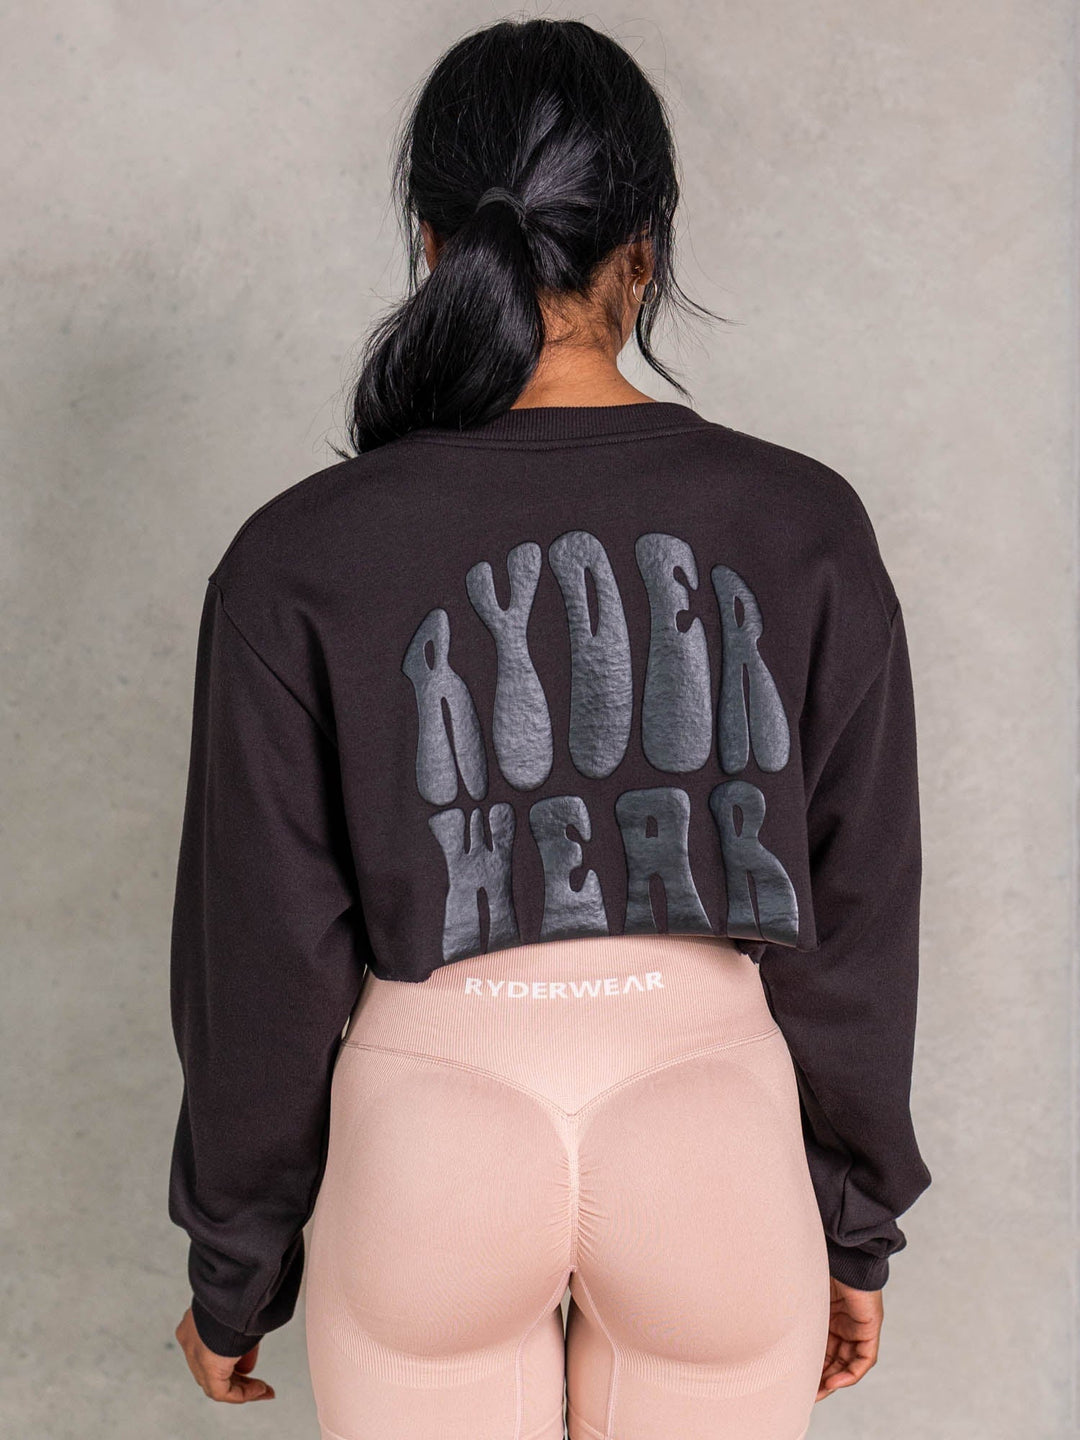 NRG Sweater - Faded Black Clothing Ryderwear 